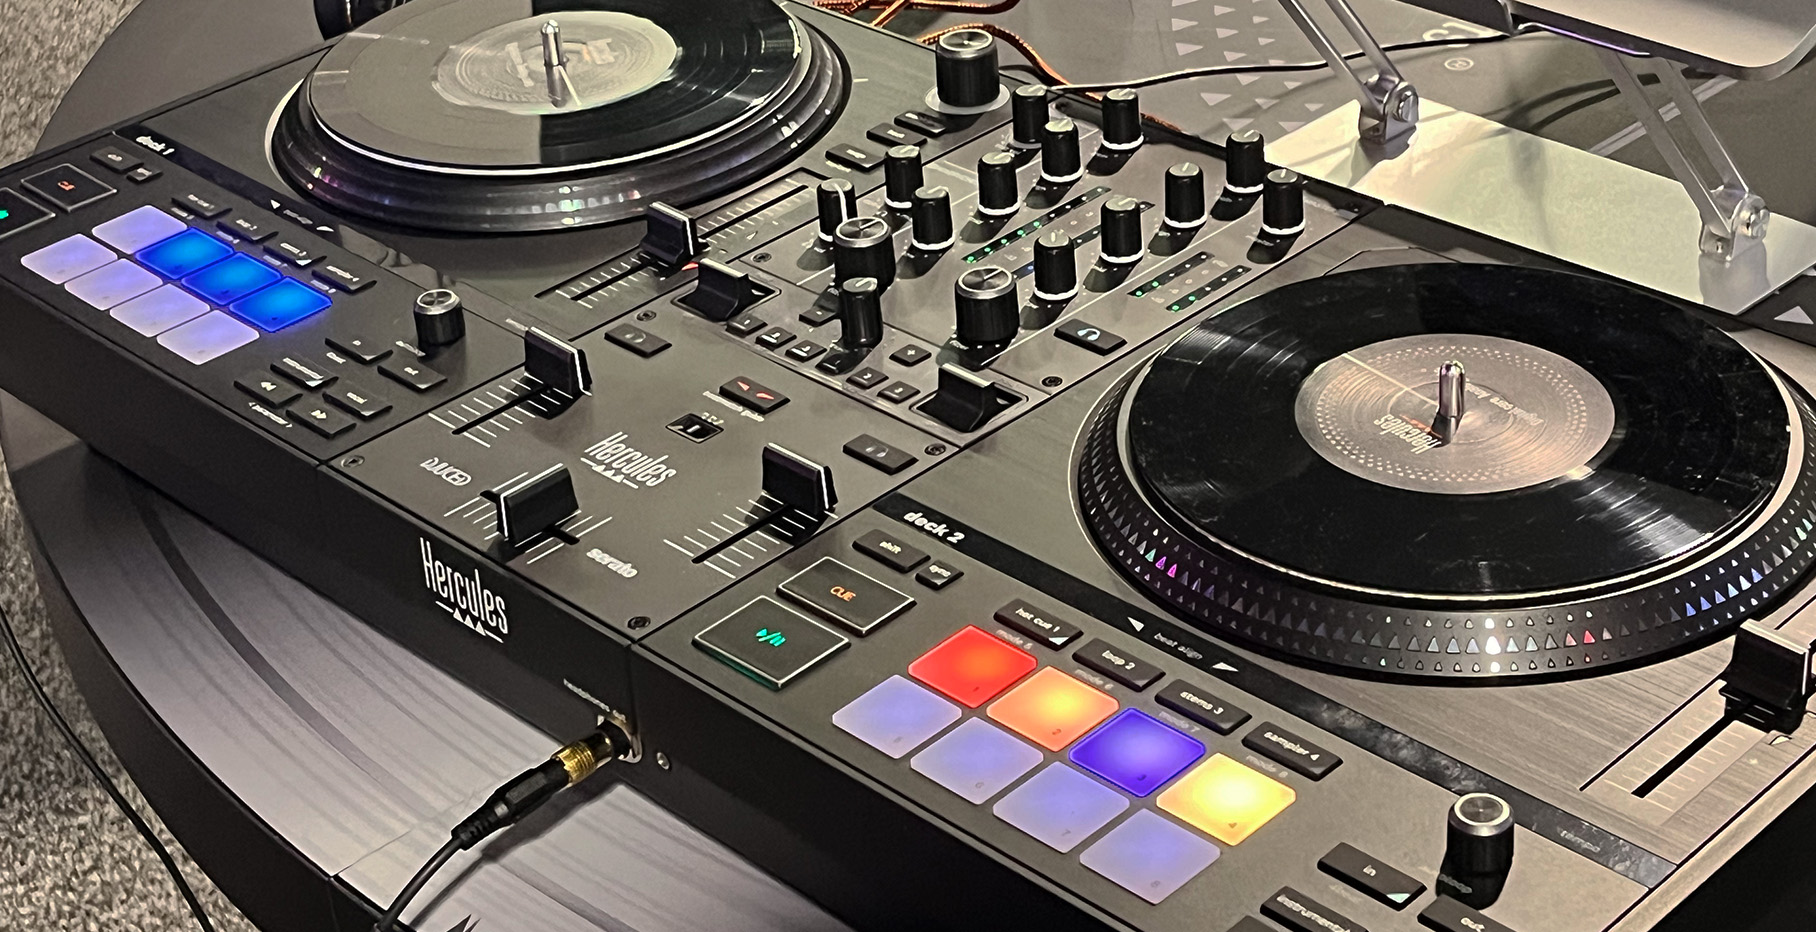 Hercules DJ Inpulse300 DJ Controller Version 1